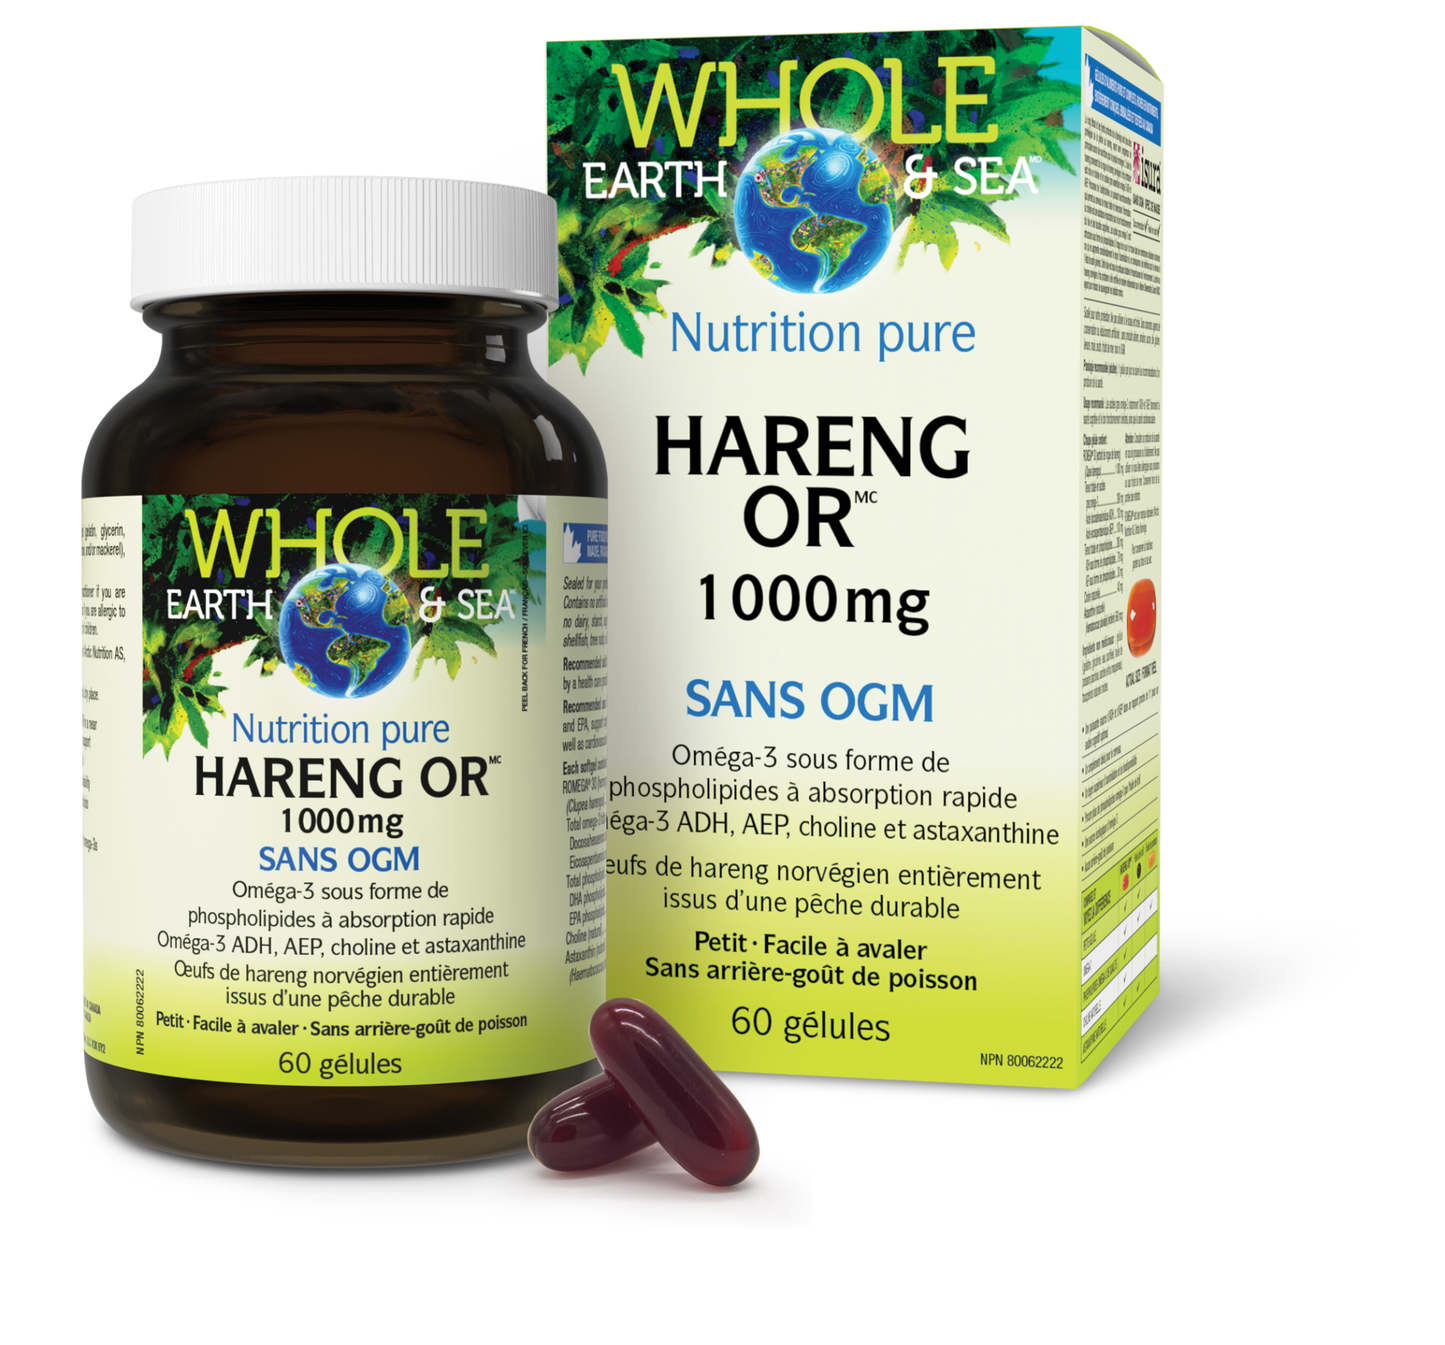 Hareng Or 1 000 mg, Whole Earth & Sea, Whole Earth & Sea®|v|image|35497